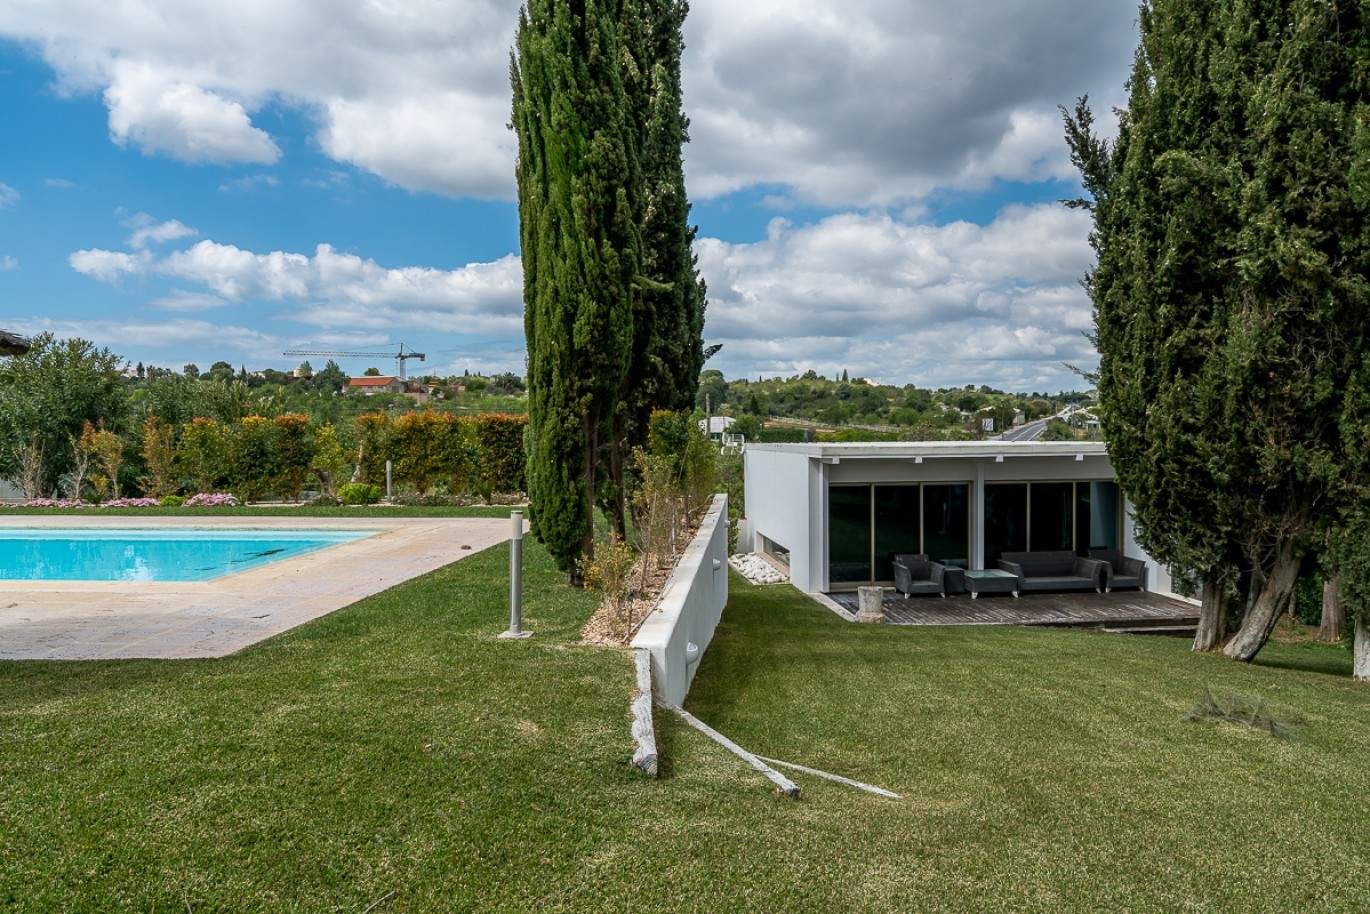 Venda de moradia de luxo com piscina, Silves, Algarve_77350